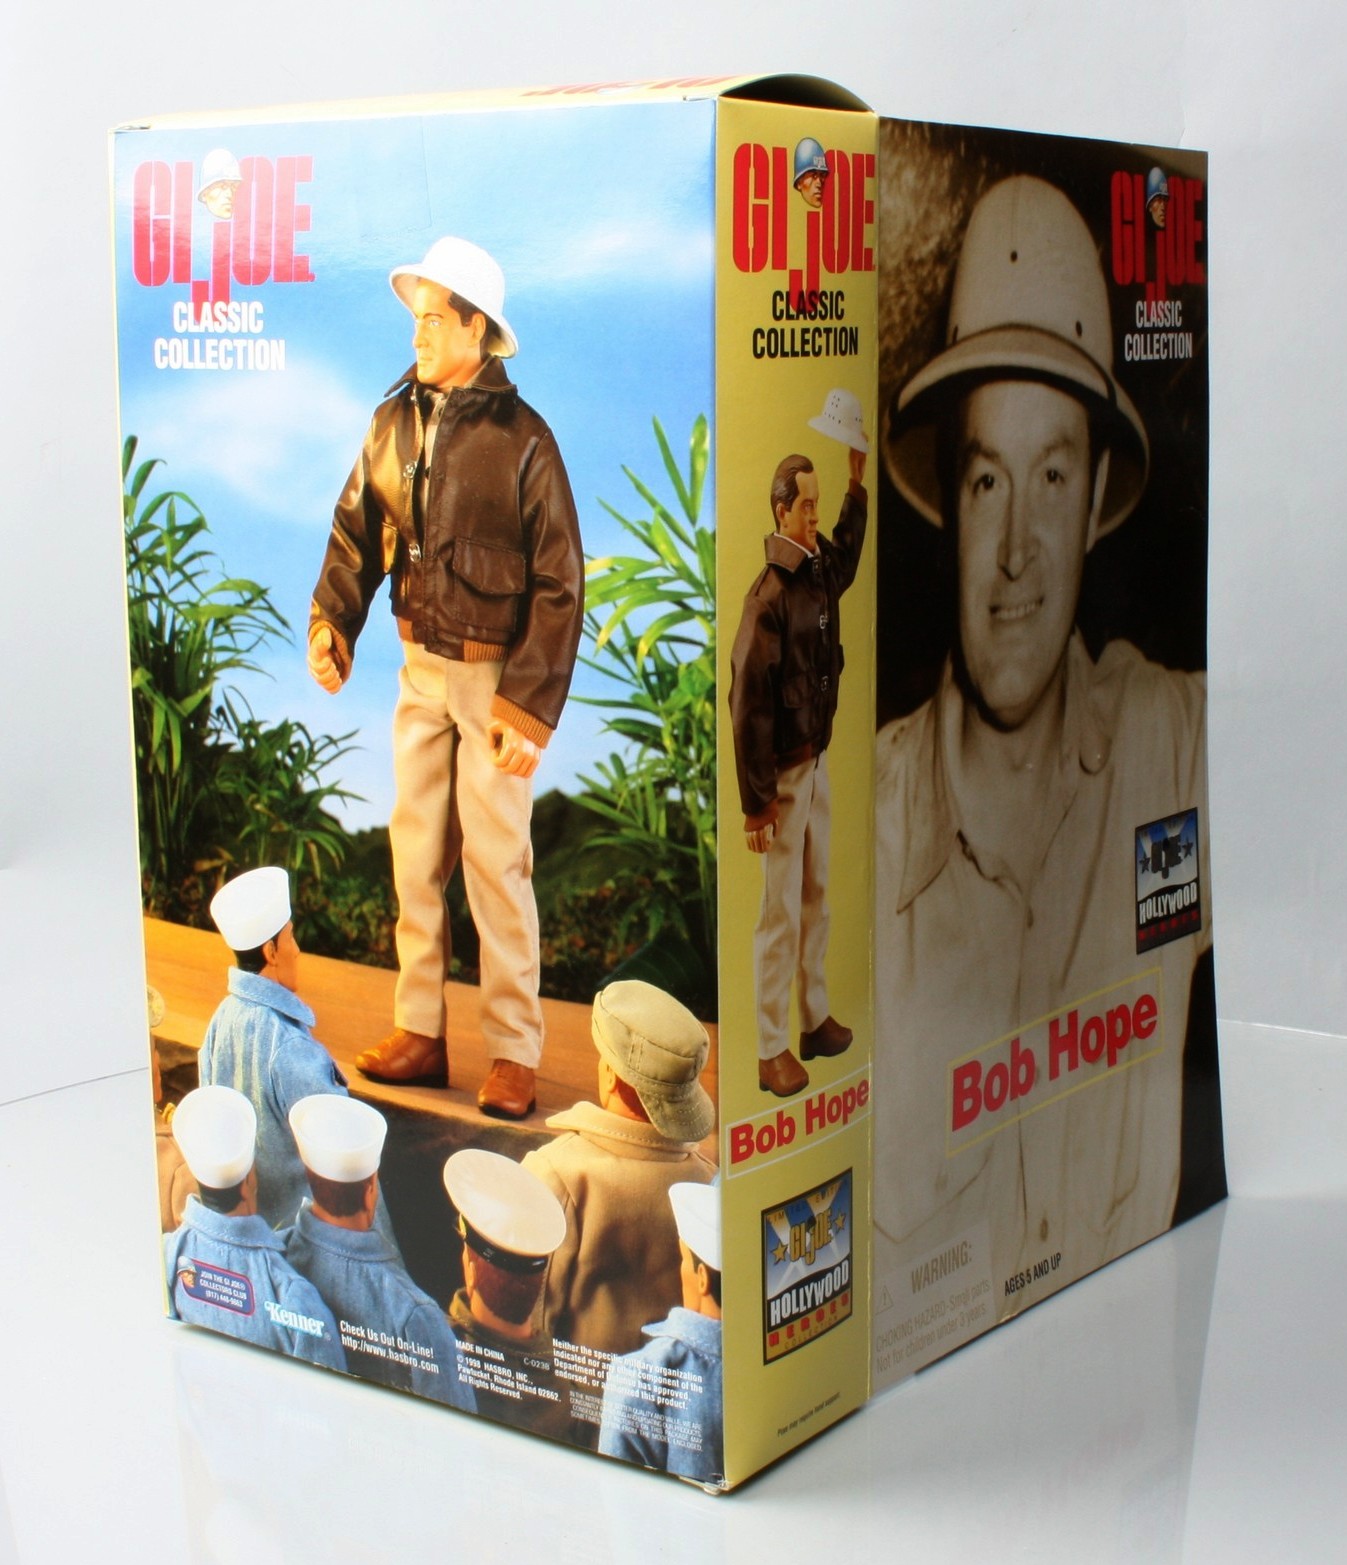 1998 Hasbro Gi Joe Classic Collection Bob Hope Hollywood Heroes Ww2 USO Tour MIB for sale online 